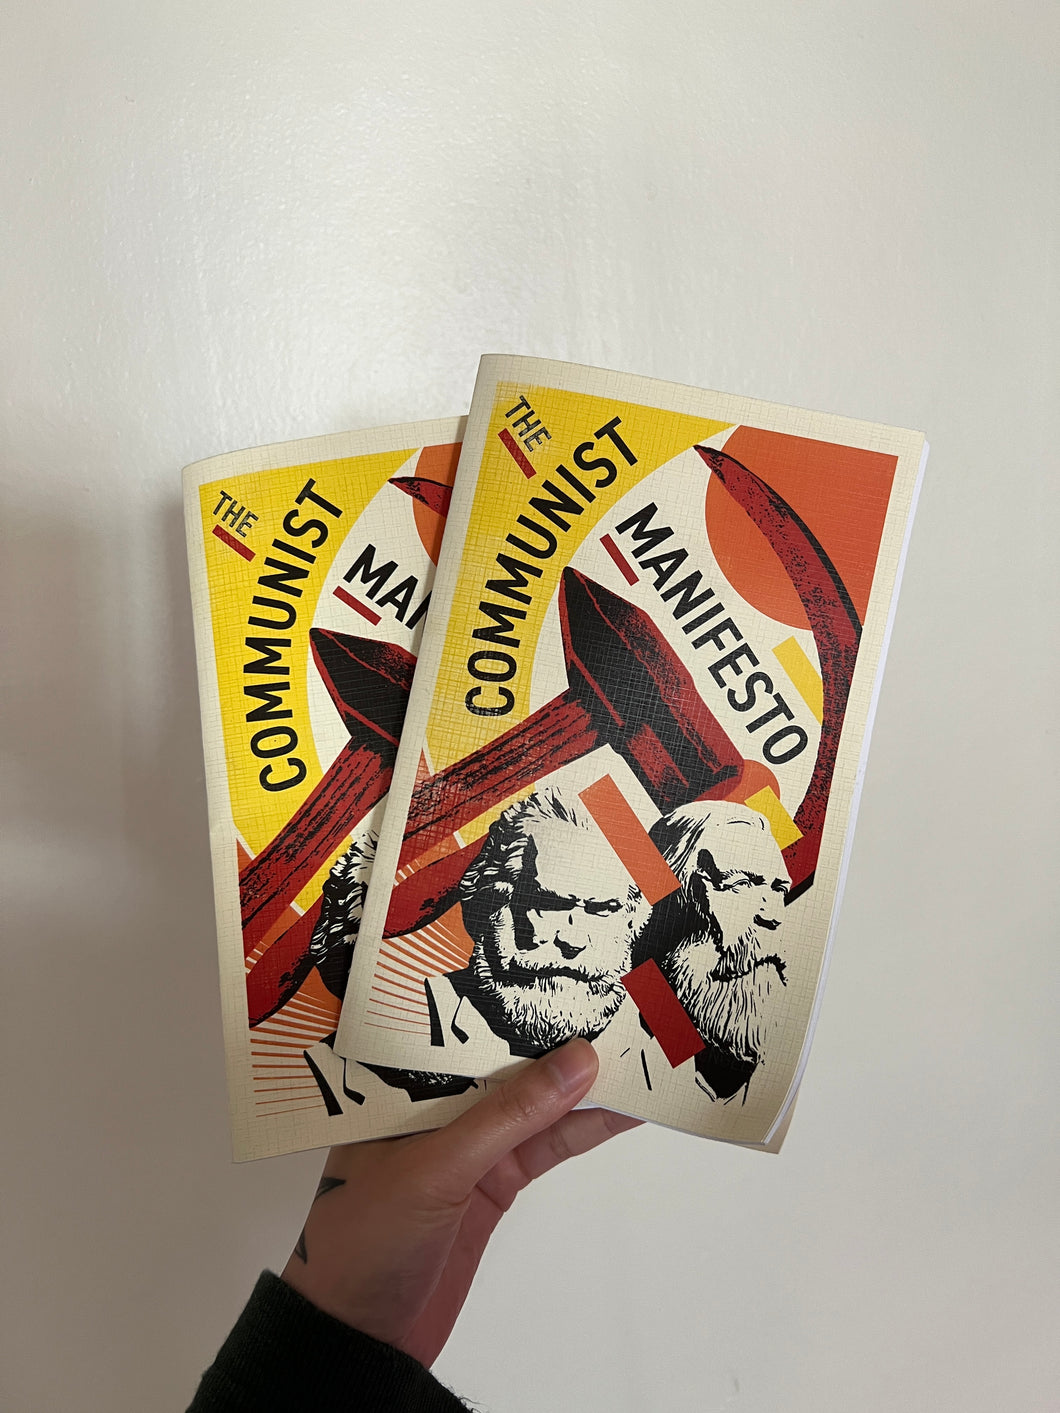 The Communist Manifesto All Power Edition